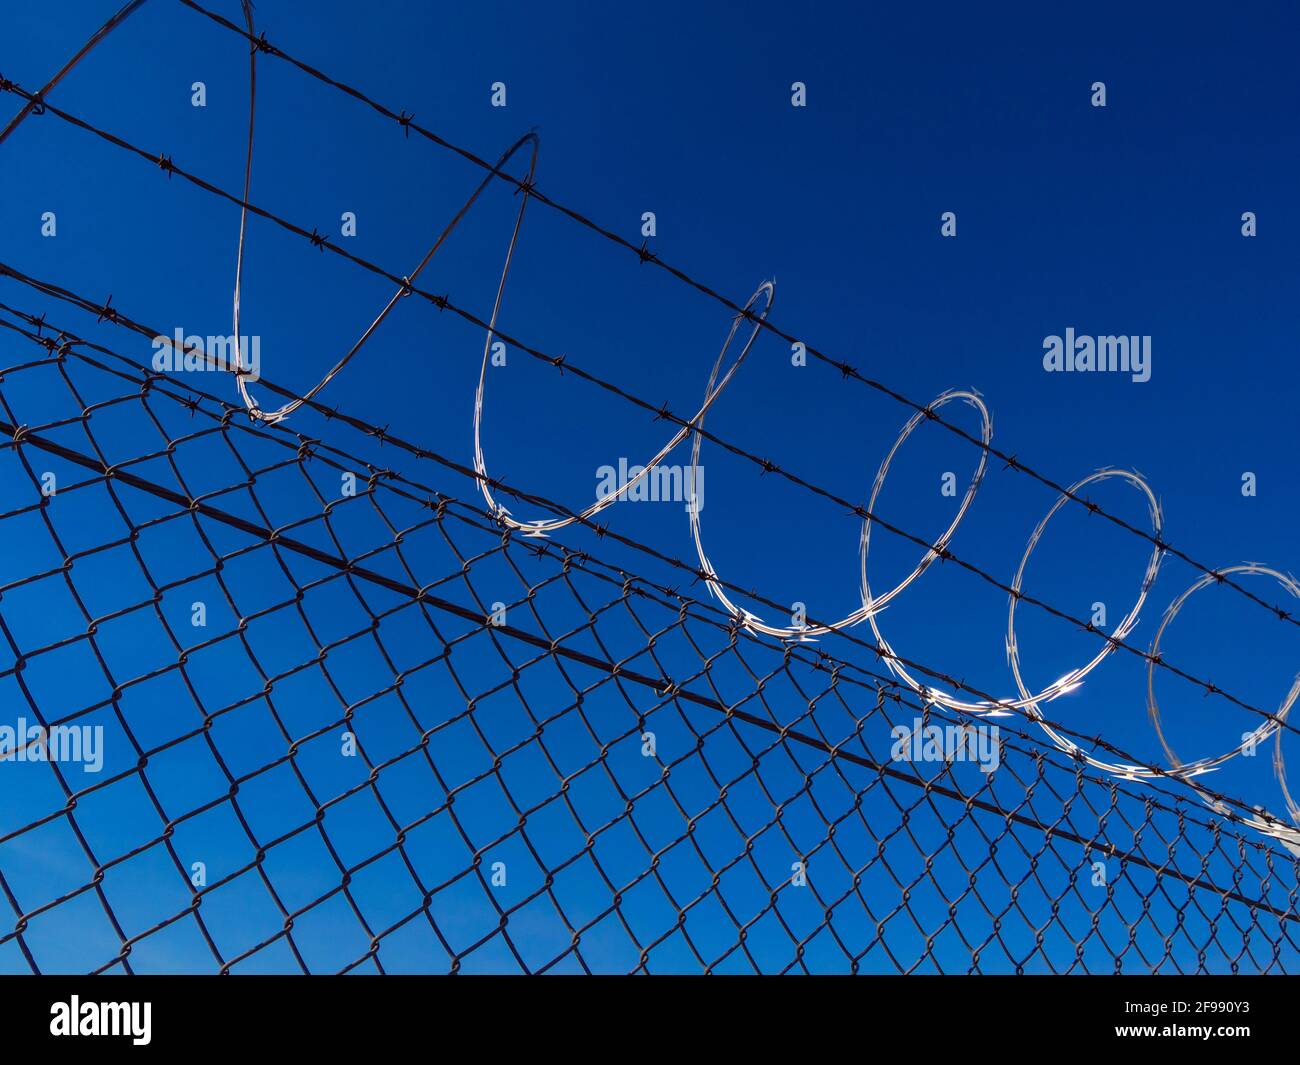 Femce with barb wire close up shot - USA 2017 Stock Photo